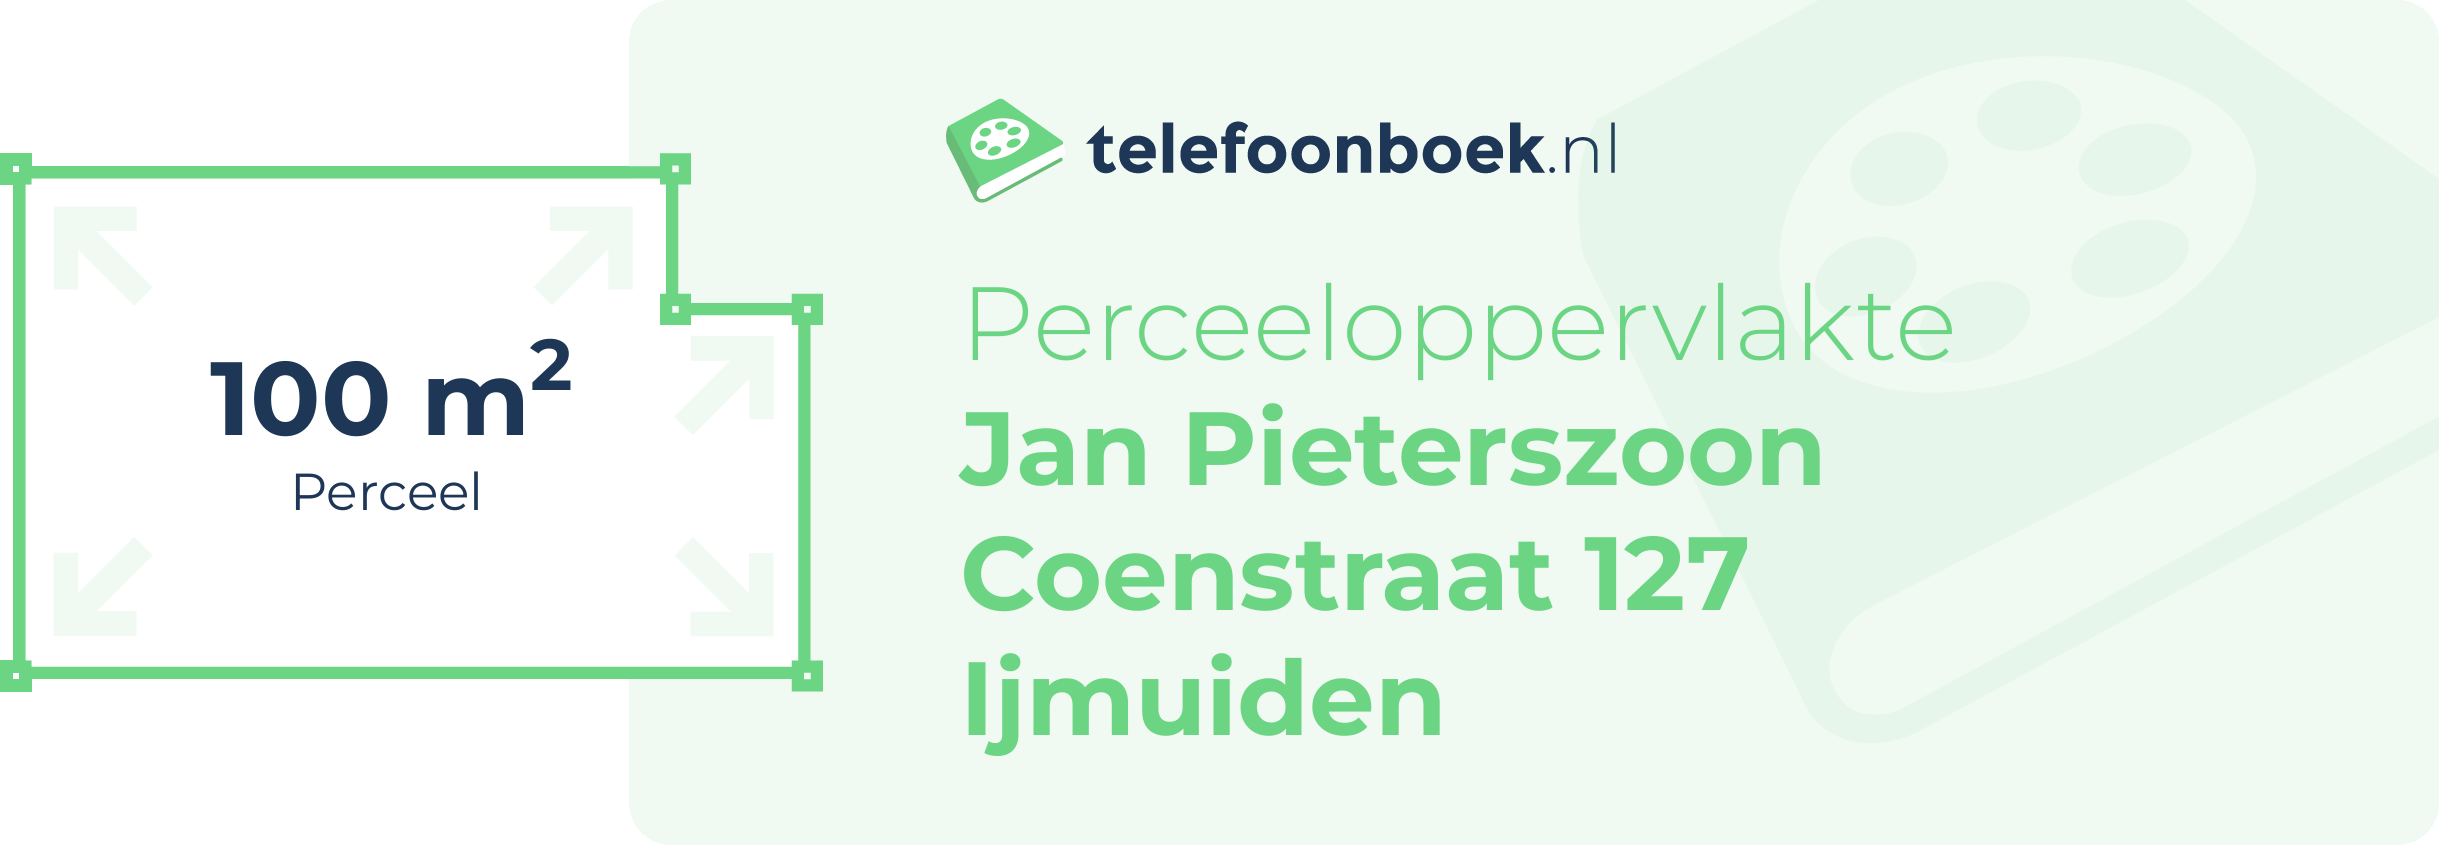 Perceeloppervlakte Jan Pieterszoon Coenstraat 127 Ijmuiden